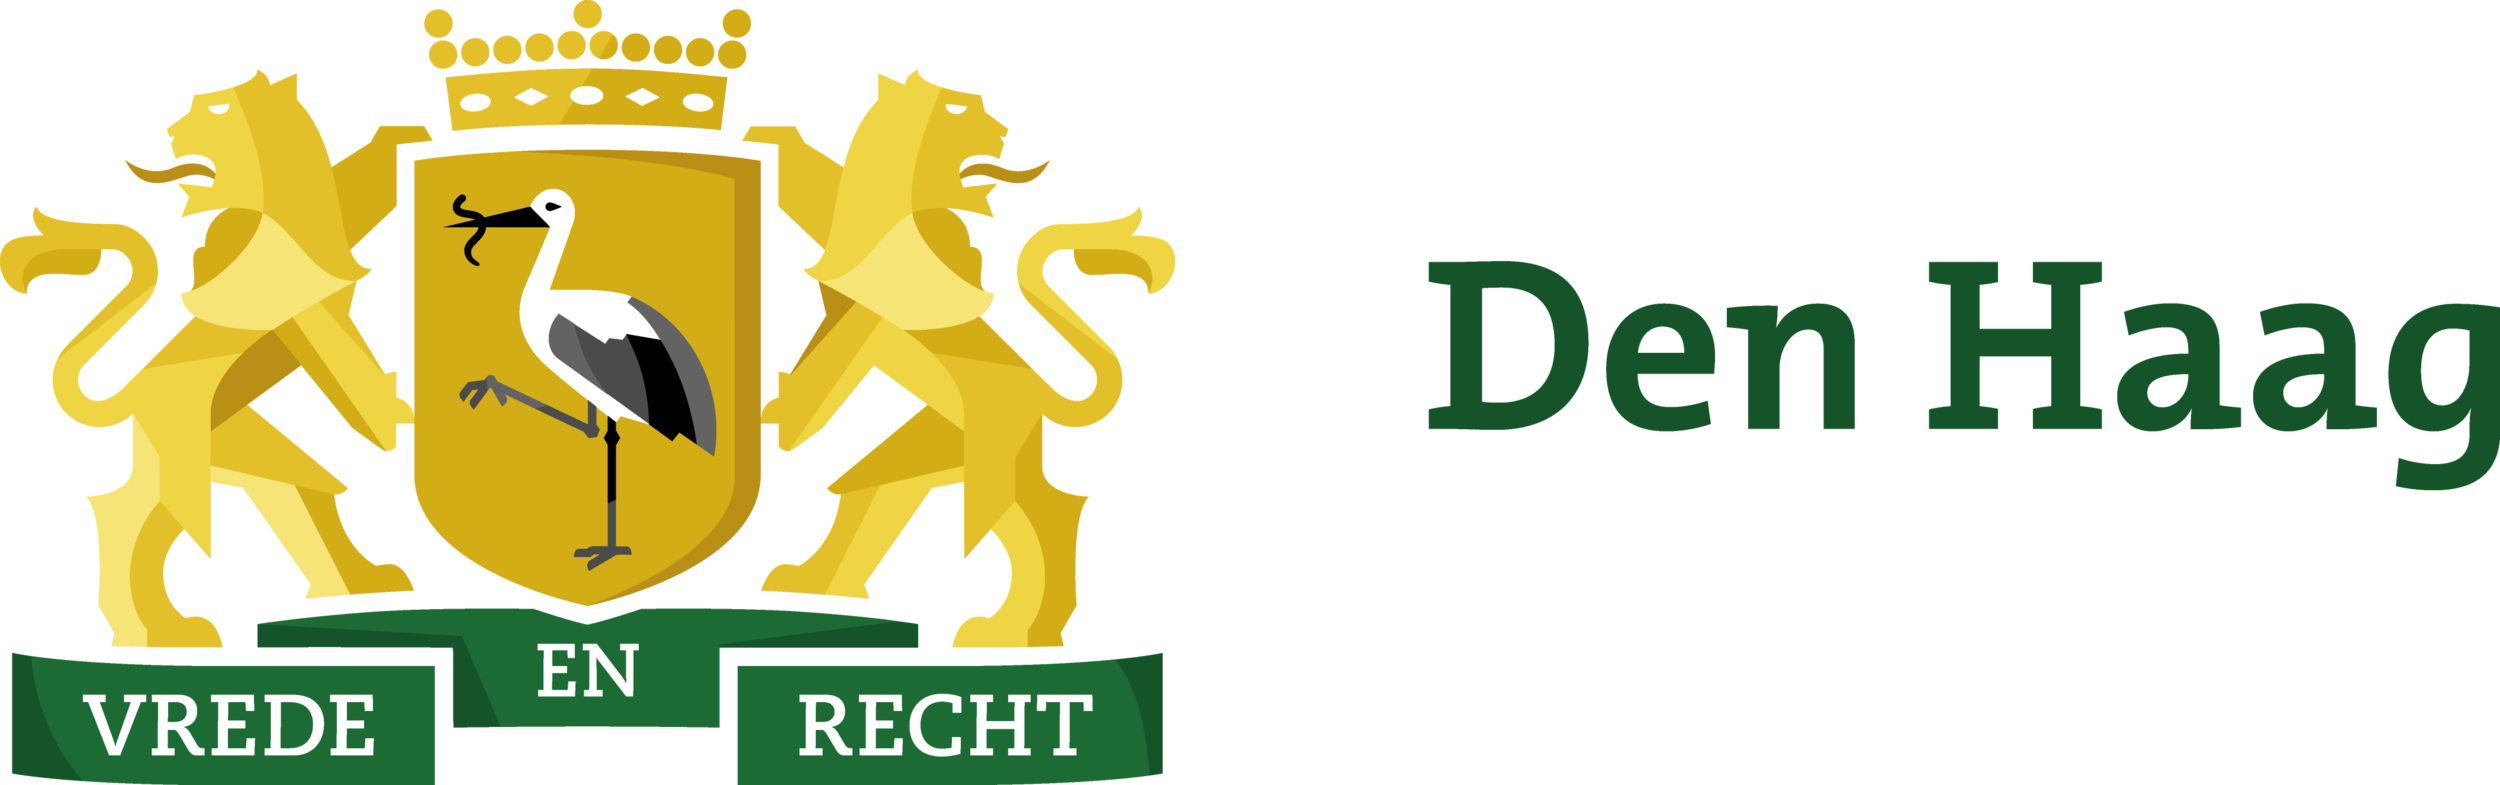 gemeente-Den-Haag-logo-transparant